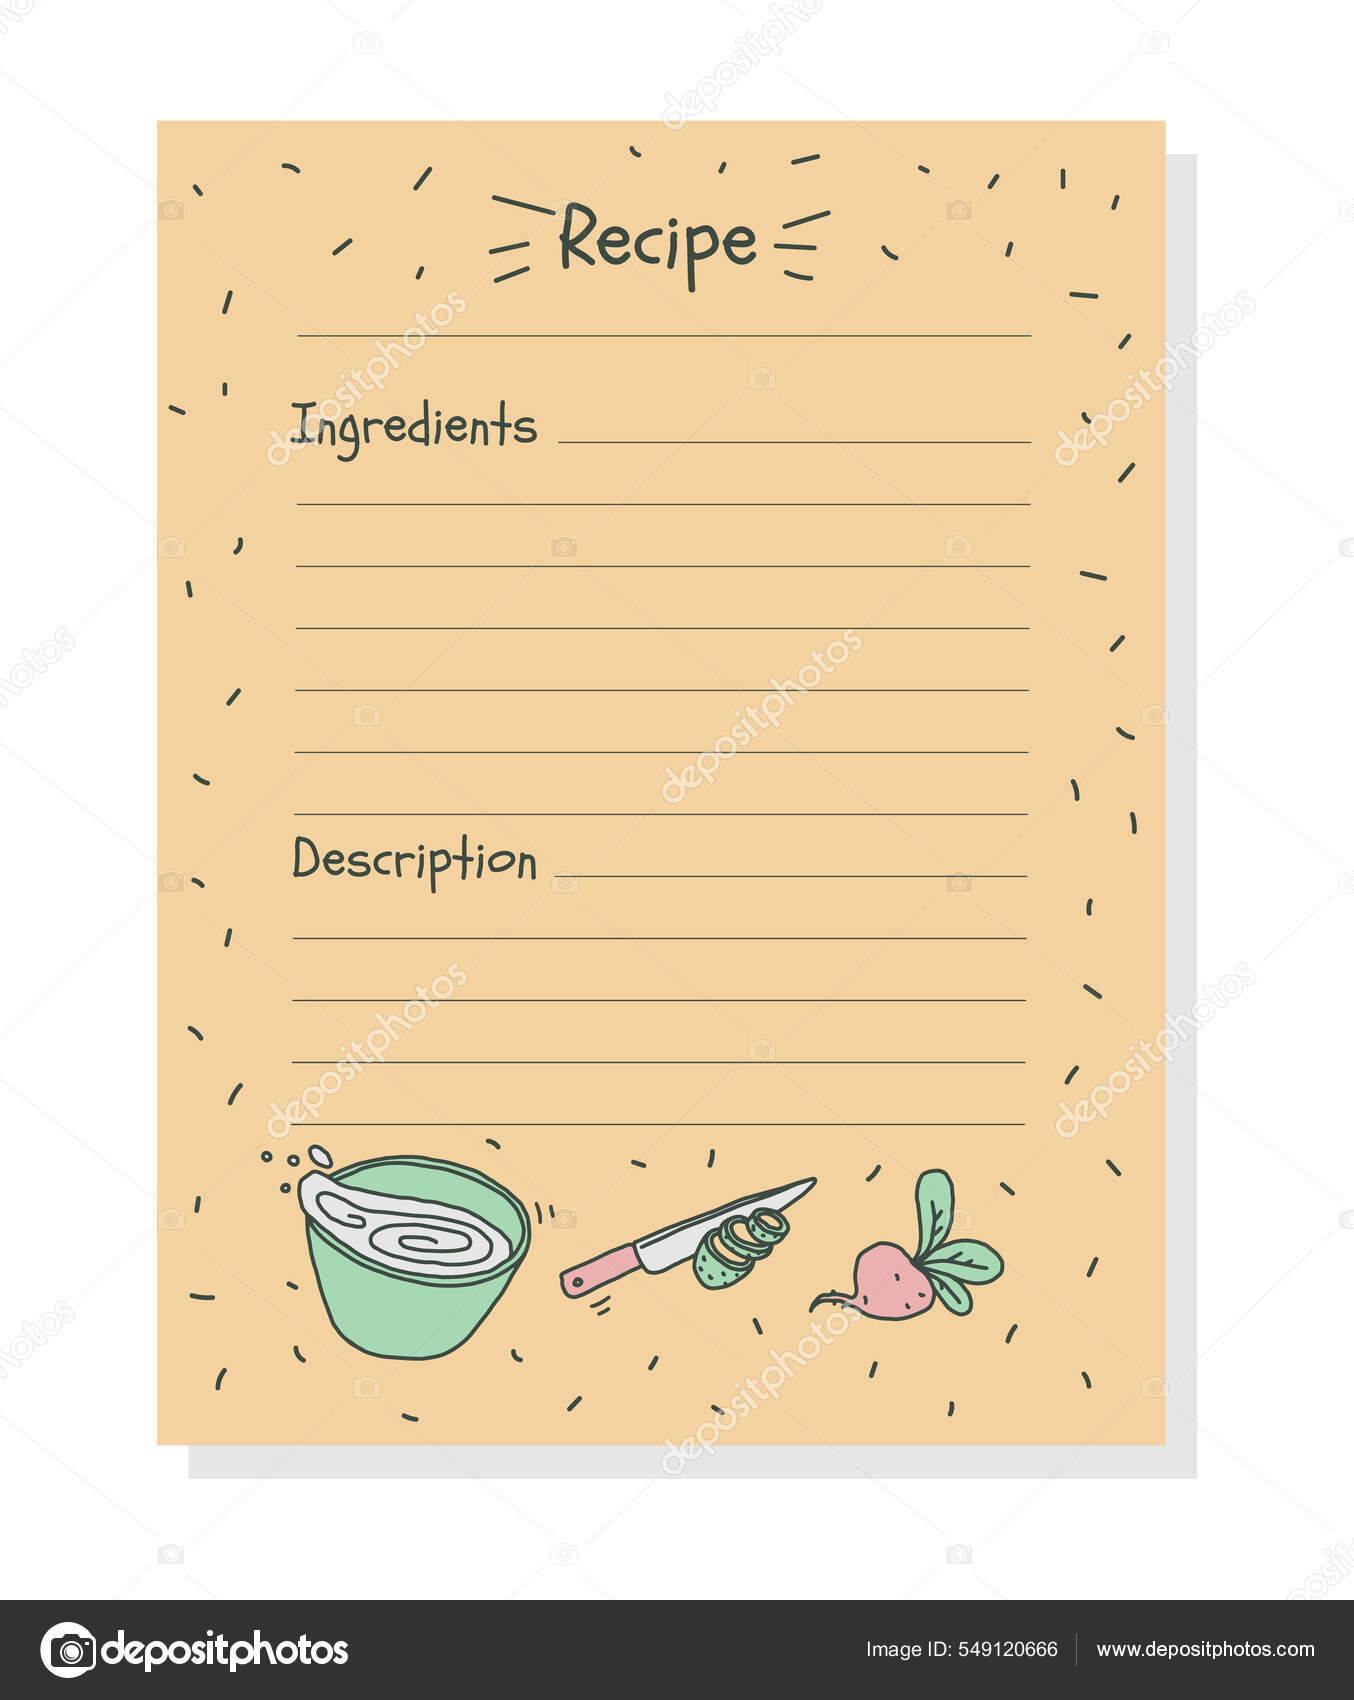 https://st.depositphotos.com/1832477/54912/v/1600/depositphotos_549120666-stock-illustration-recipe-sheet-template-with-empty.jpg